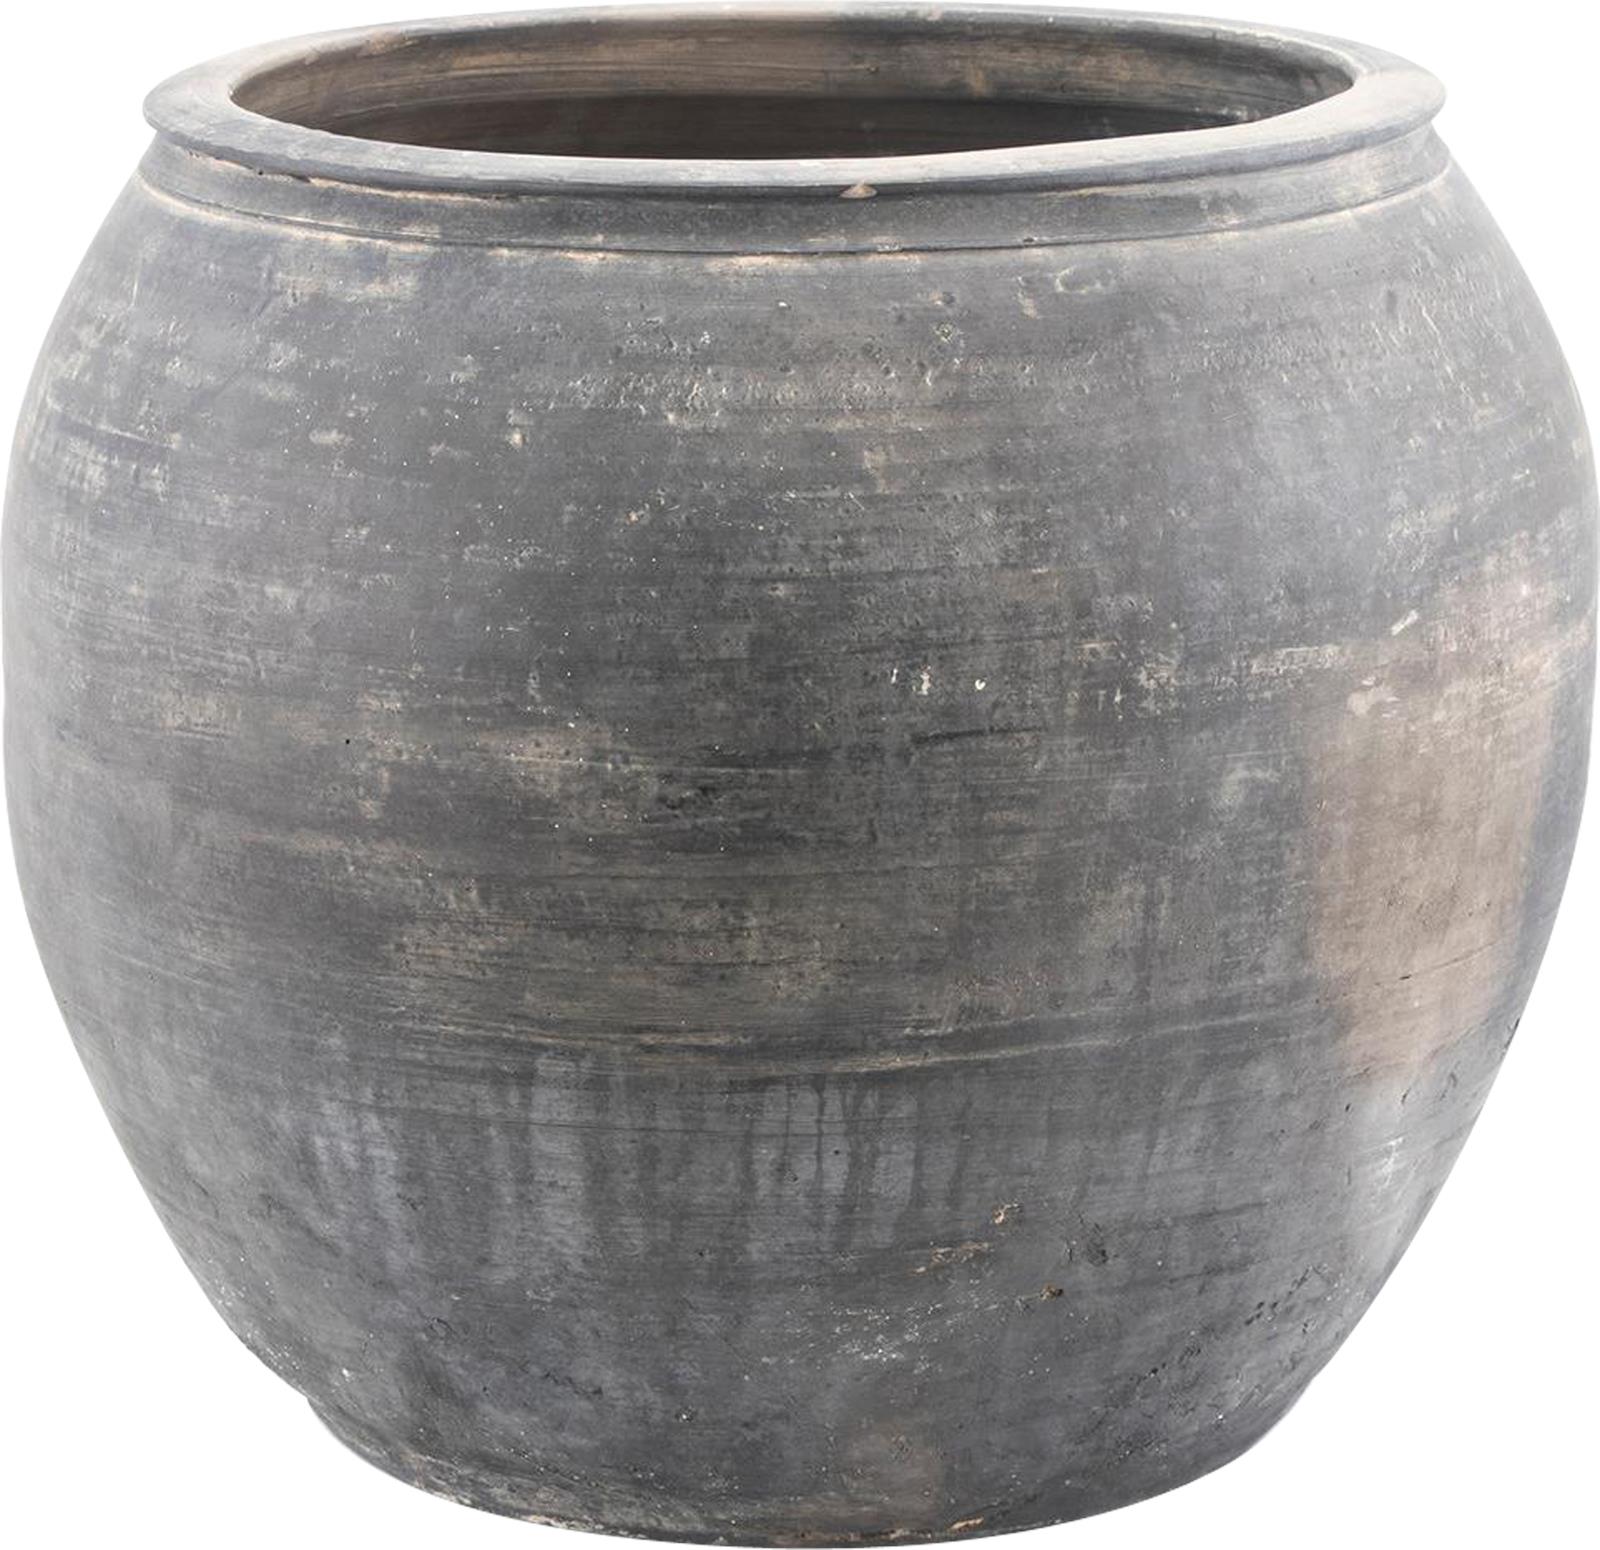 Water Jar Vase Vintage Large Gray Pottery Ceramic Handmade Hand-Cra-Image 3